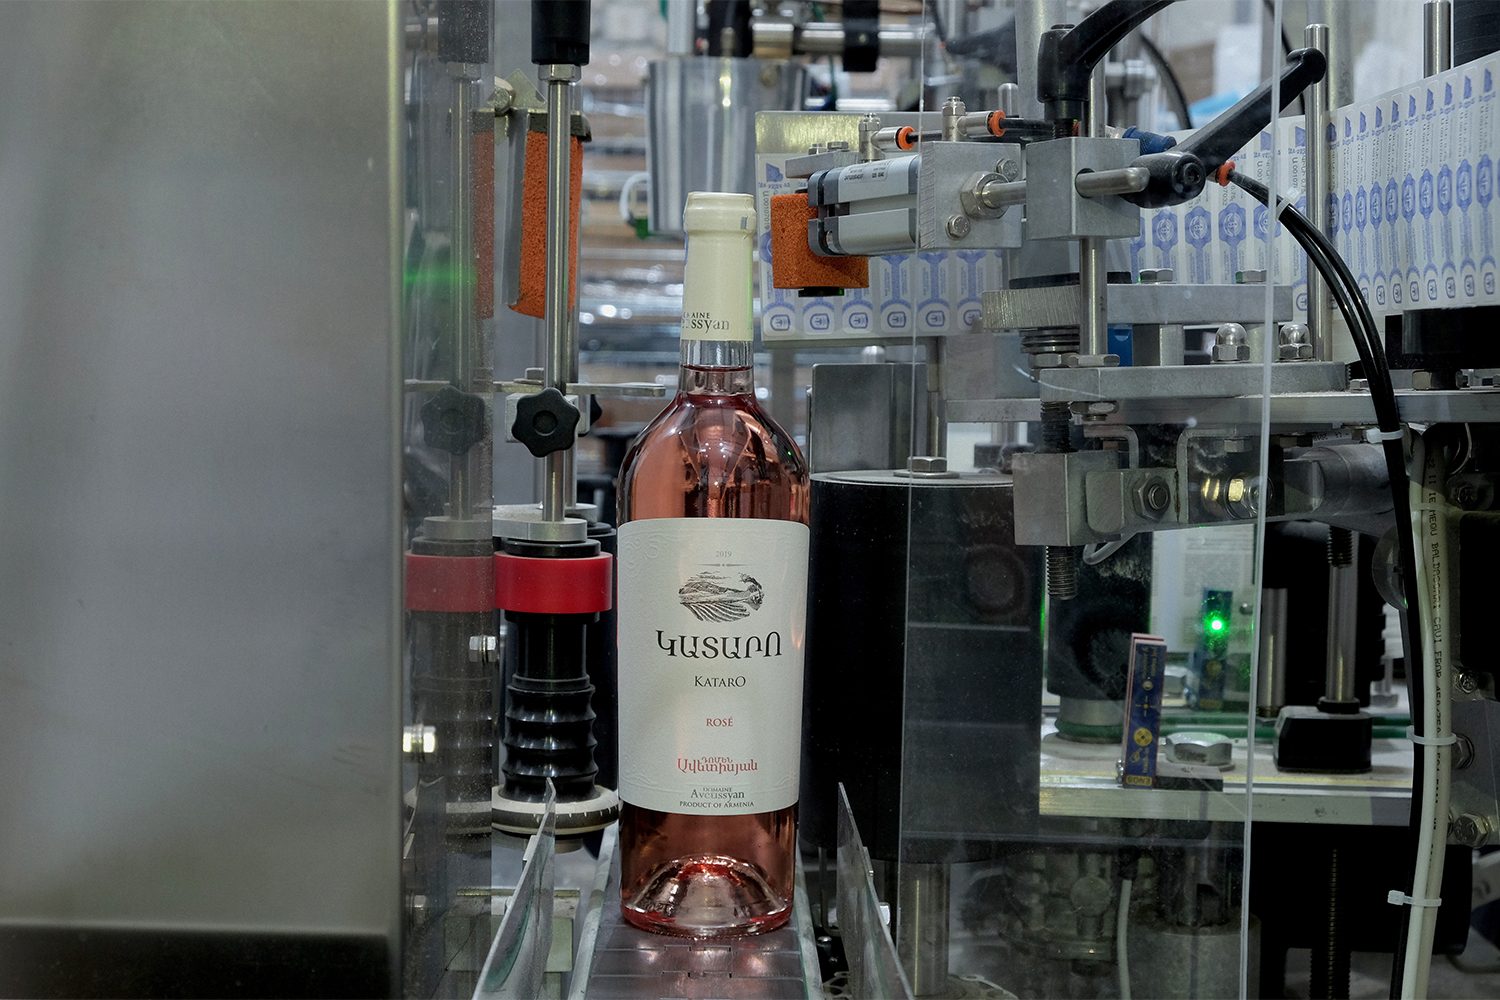 New Kataro Rose wine promises delicate taste and diamond shine